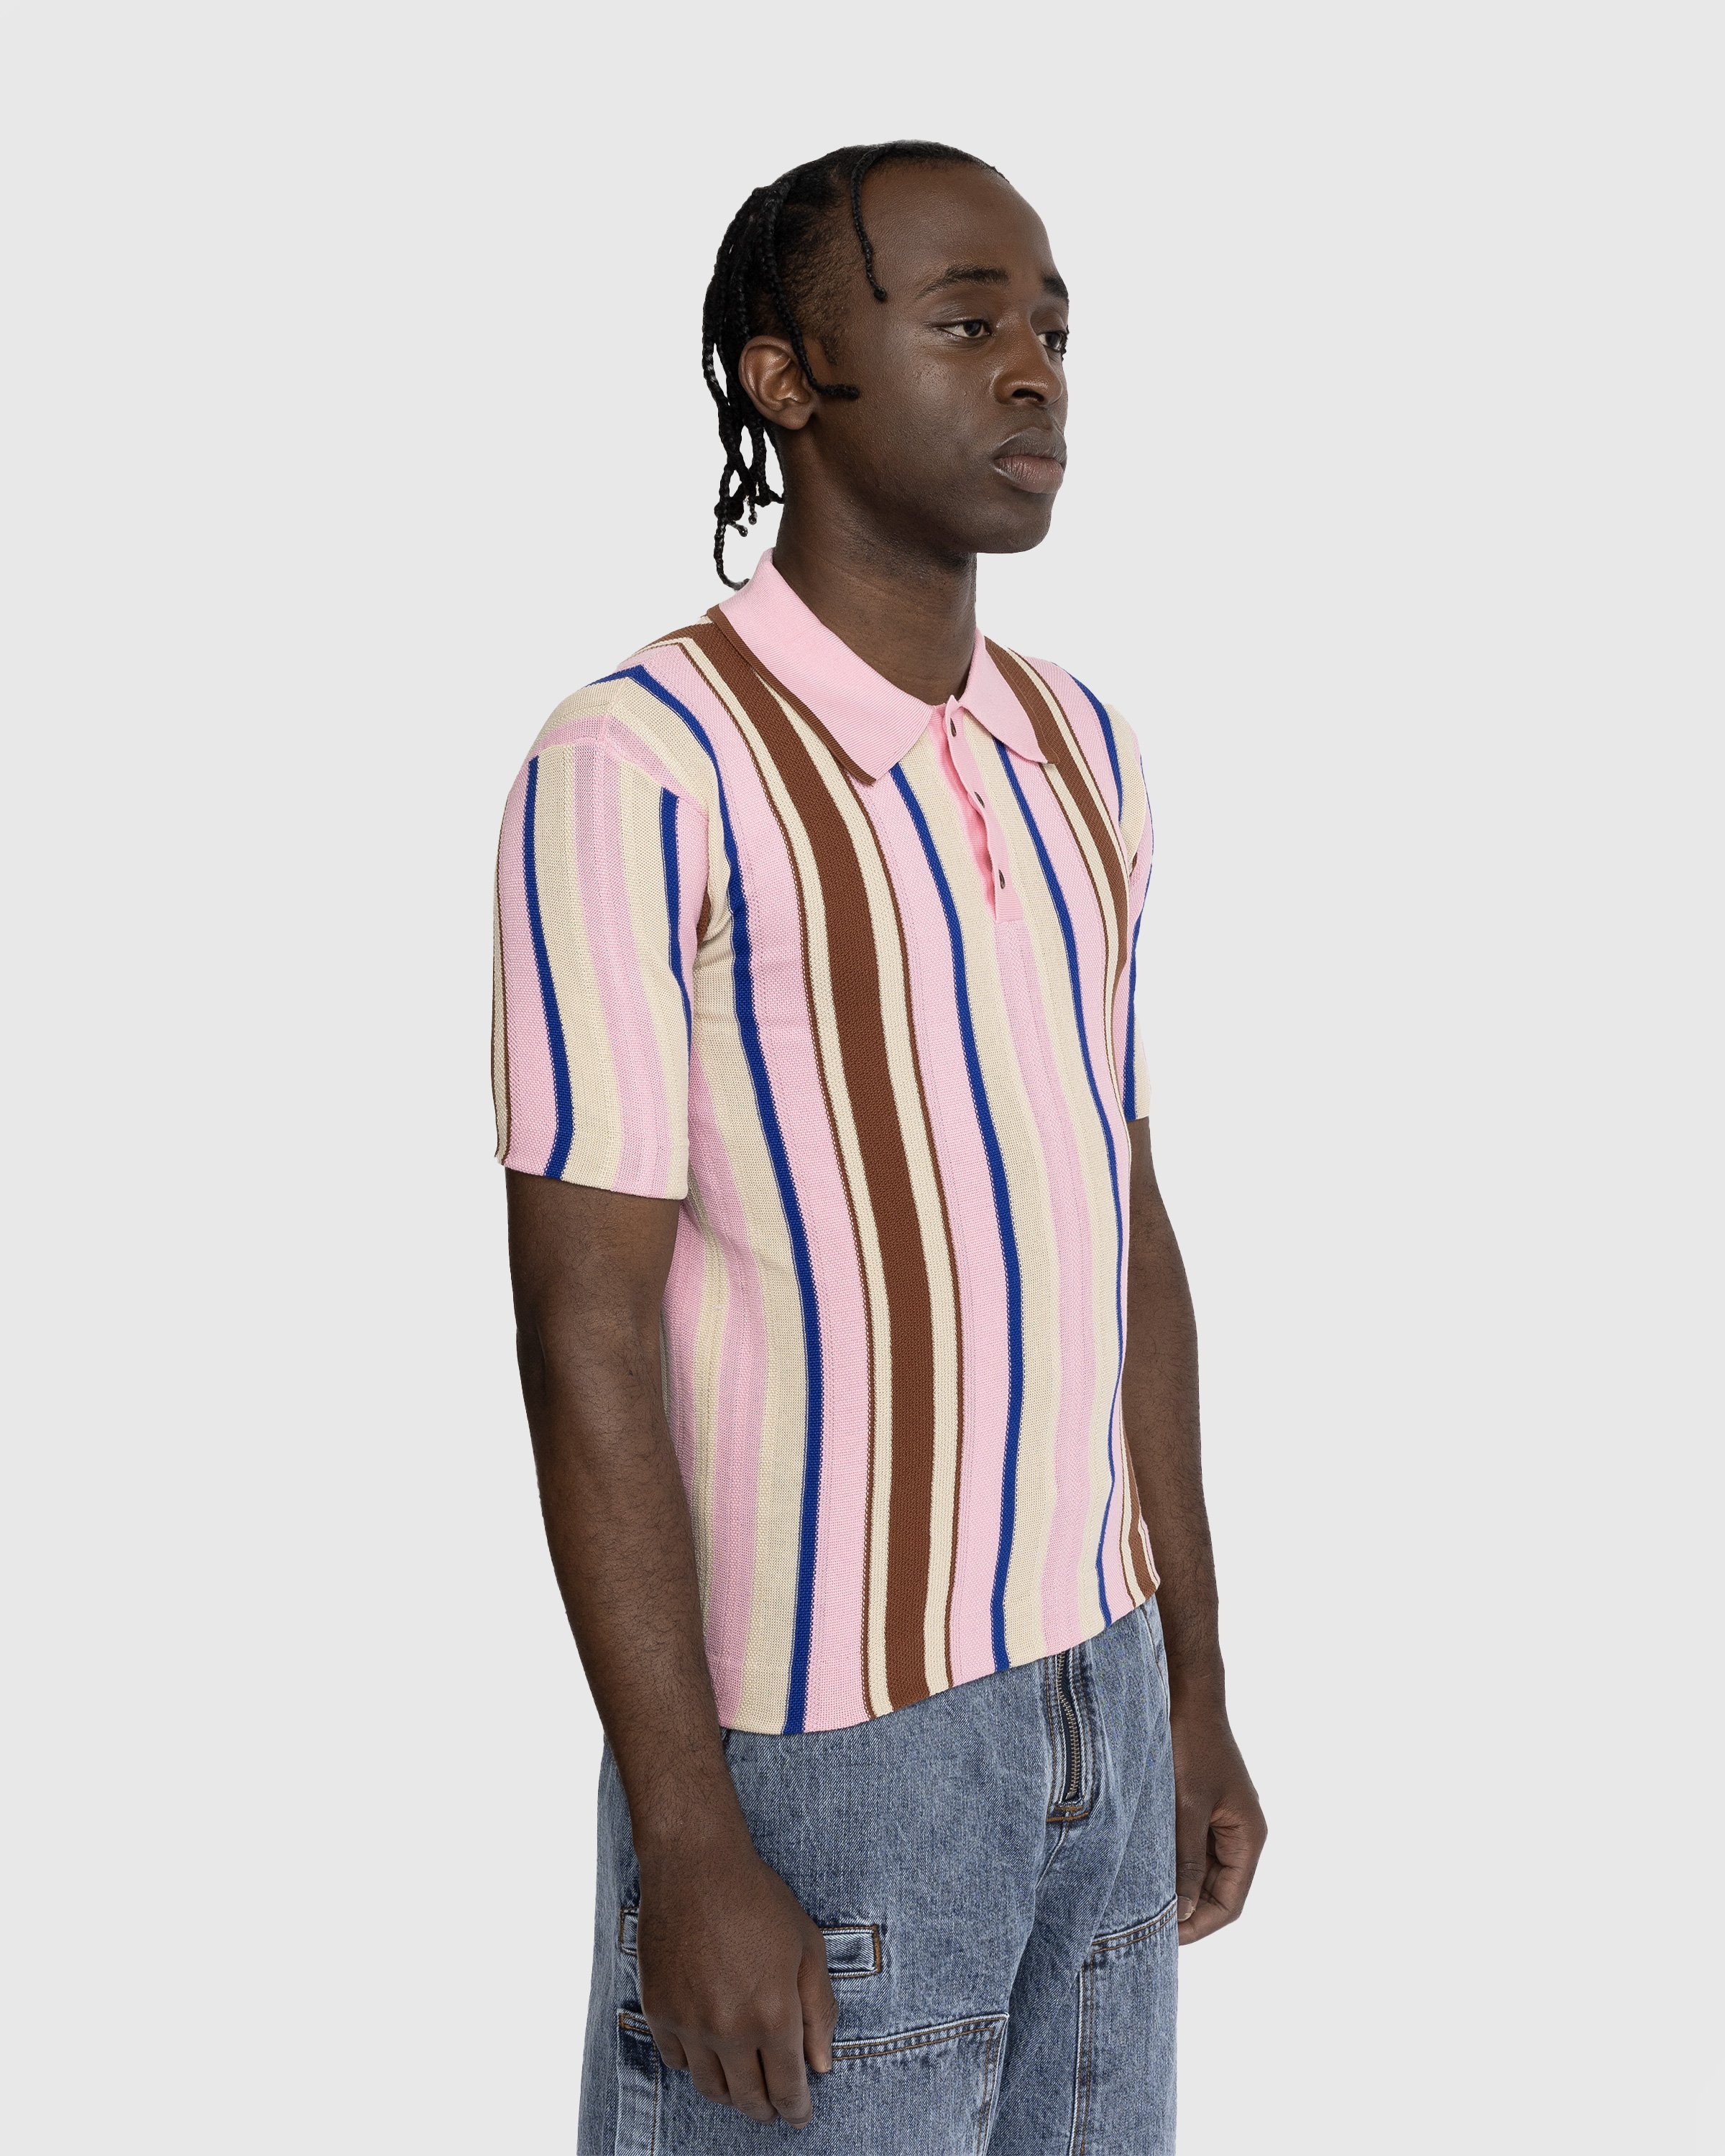 Wales Bonner - Optimist Polo Shirt - Clothing - Pink - Image 4